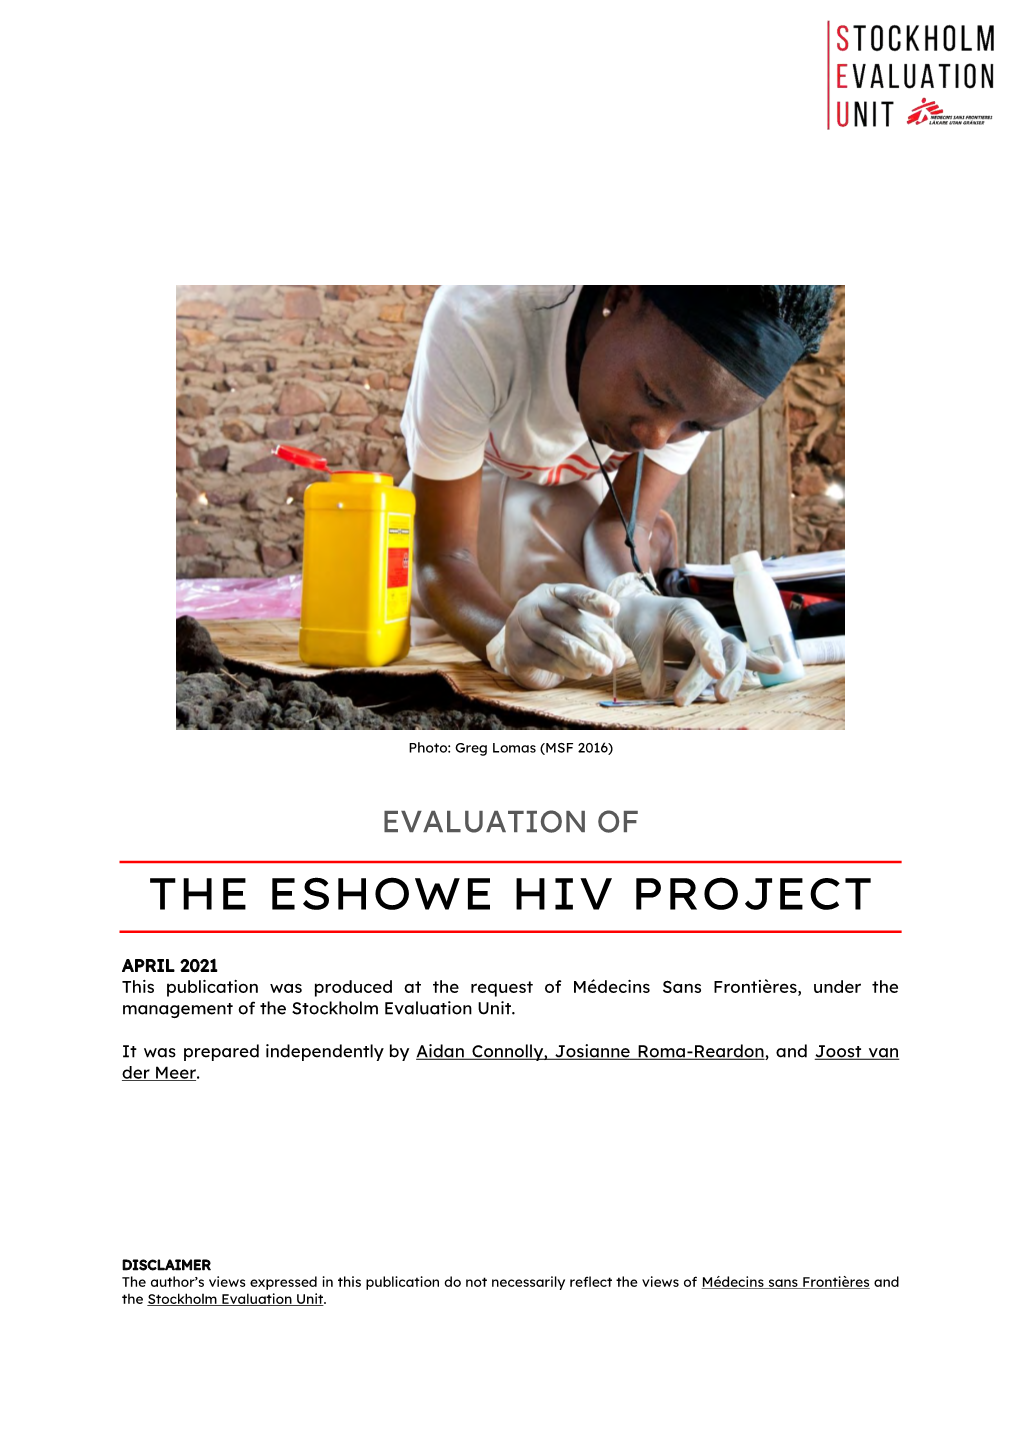 The Eshowe Hiv Project